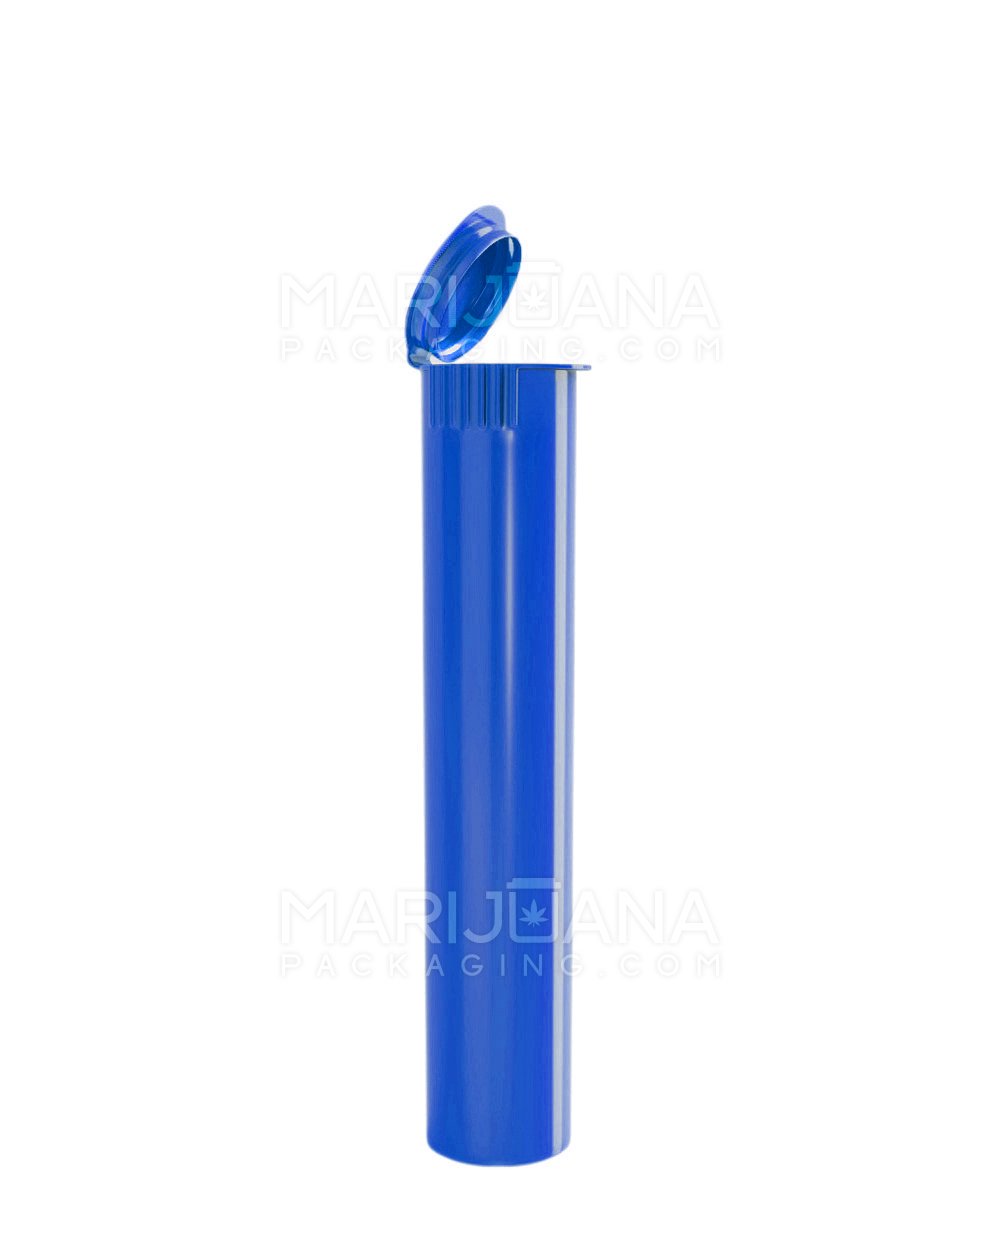 Child Resistant Pop Top Opaque Plastic Pre-Roll Tubes | 98mm - Blue | Sample - 1